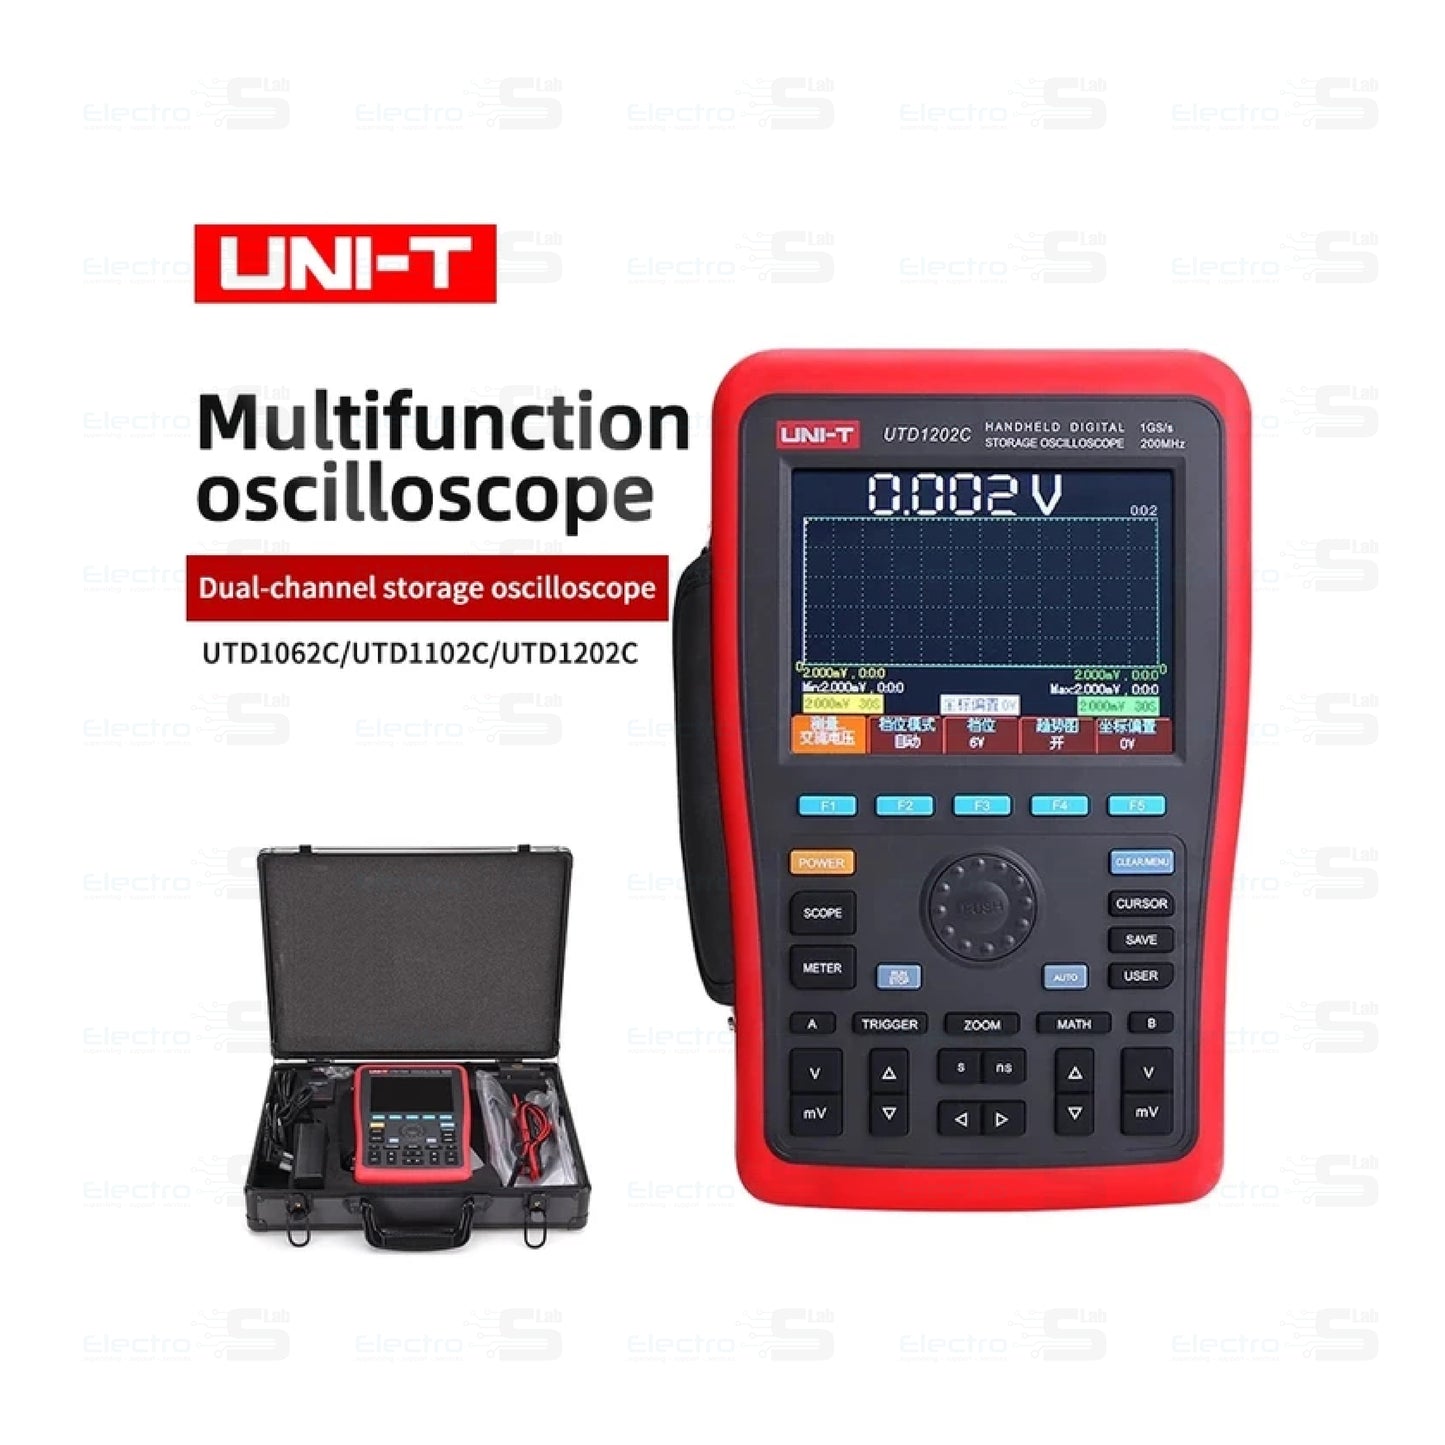 UNI-T UTD1202C Handheld Digital Storage Oscilloscope